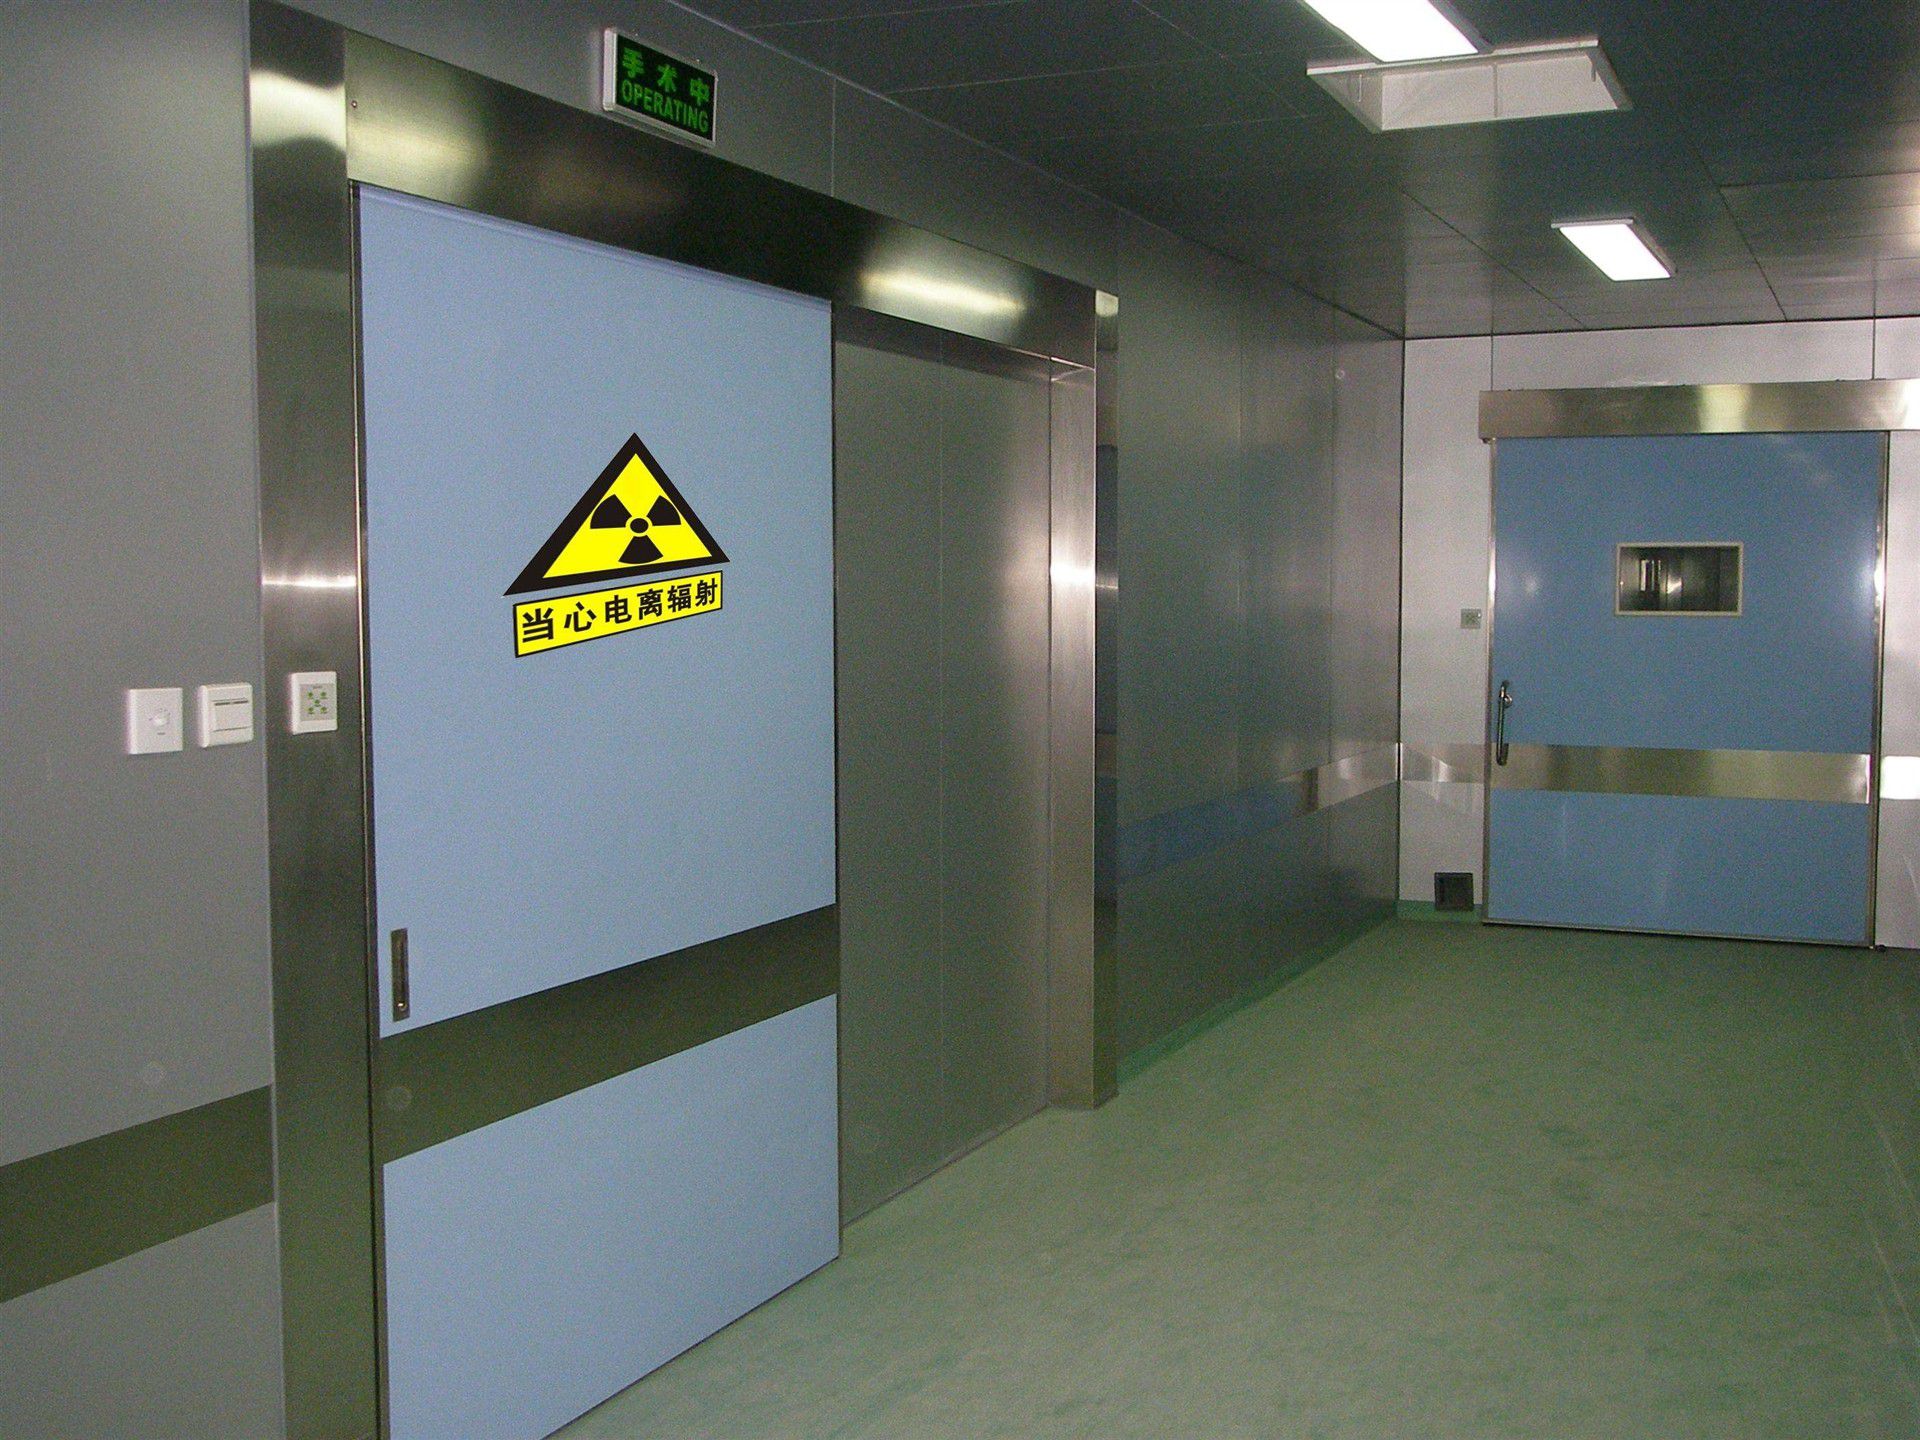 CT室铅门,铅箱,3mm铅板,CT室铅板,放射科铅板,铅板厂家-宏伟CT室铅板公司